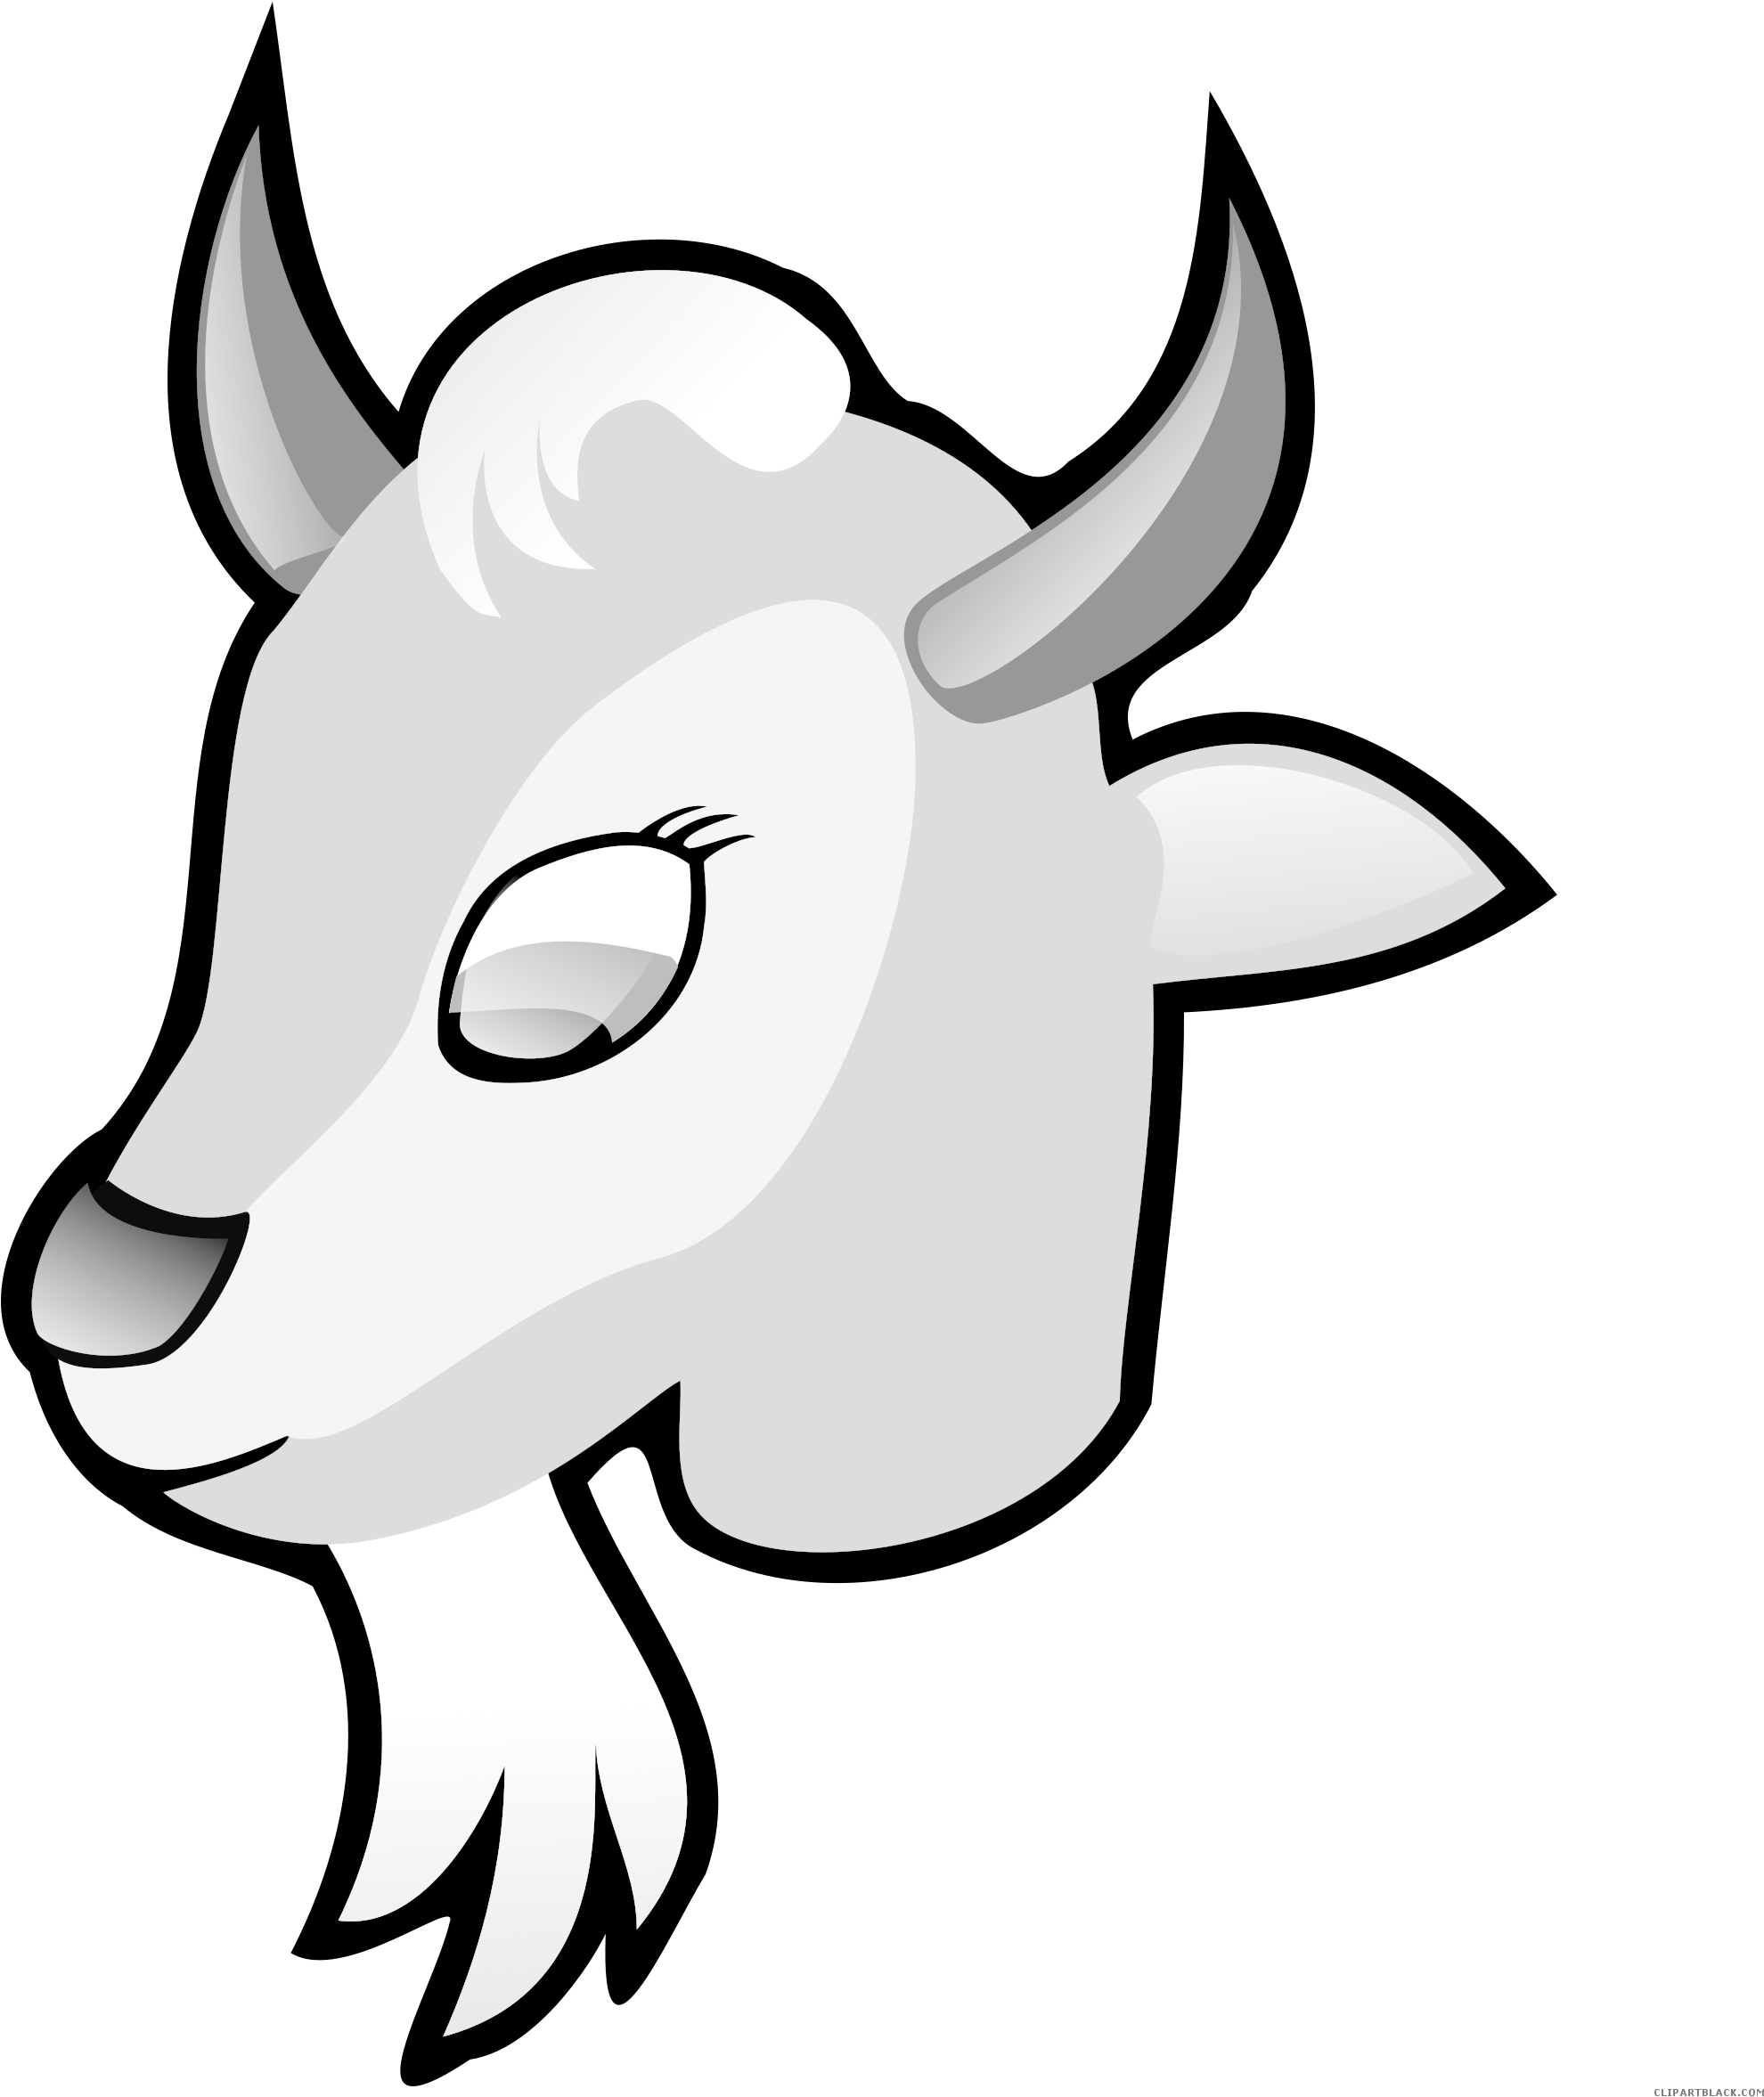 Goat Head Animal Free Black White Clipart Images Clipartblack - Cau Lac Bo Bong Da (2400x2400)